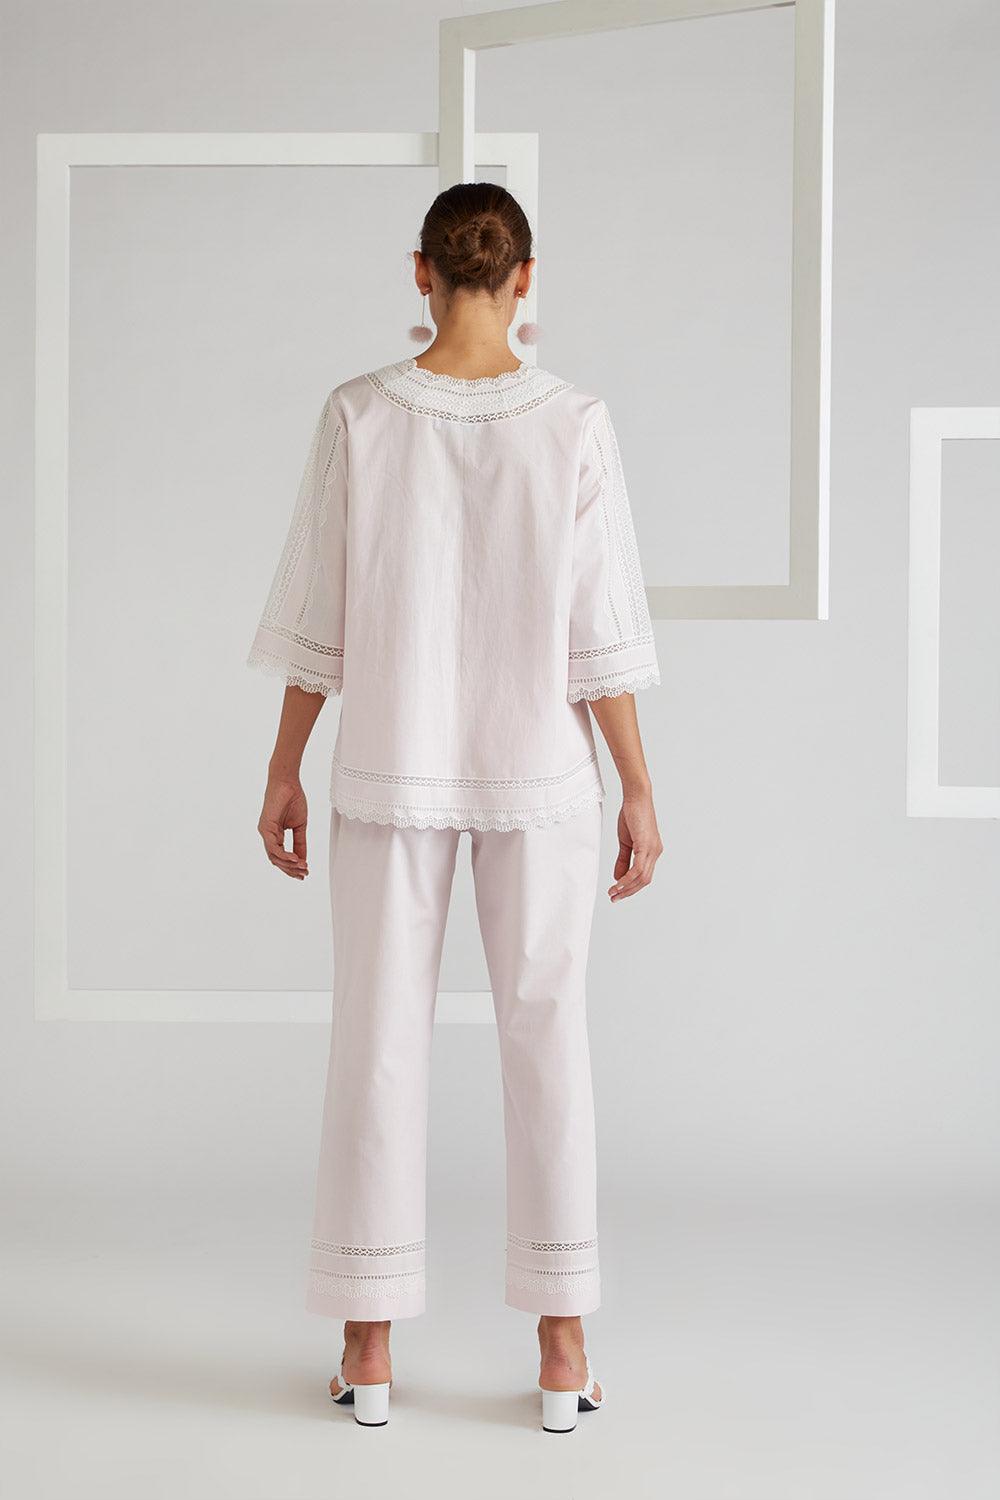 Cotton Pyjama Set Light Pink - Miss Sheer - Bocan